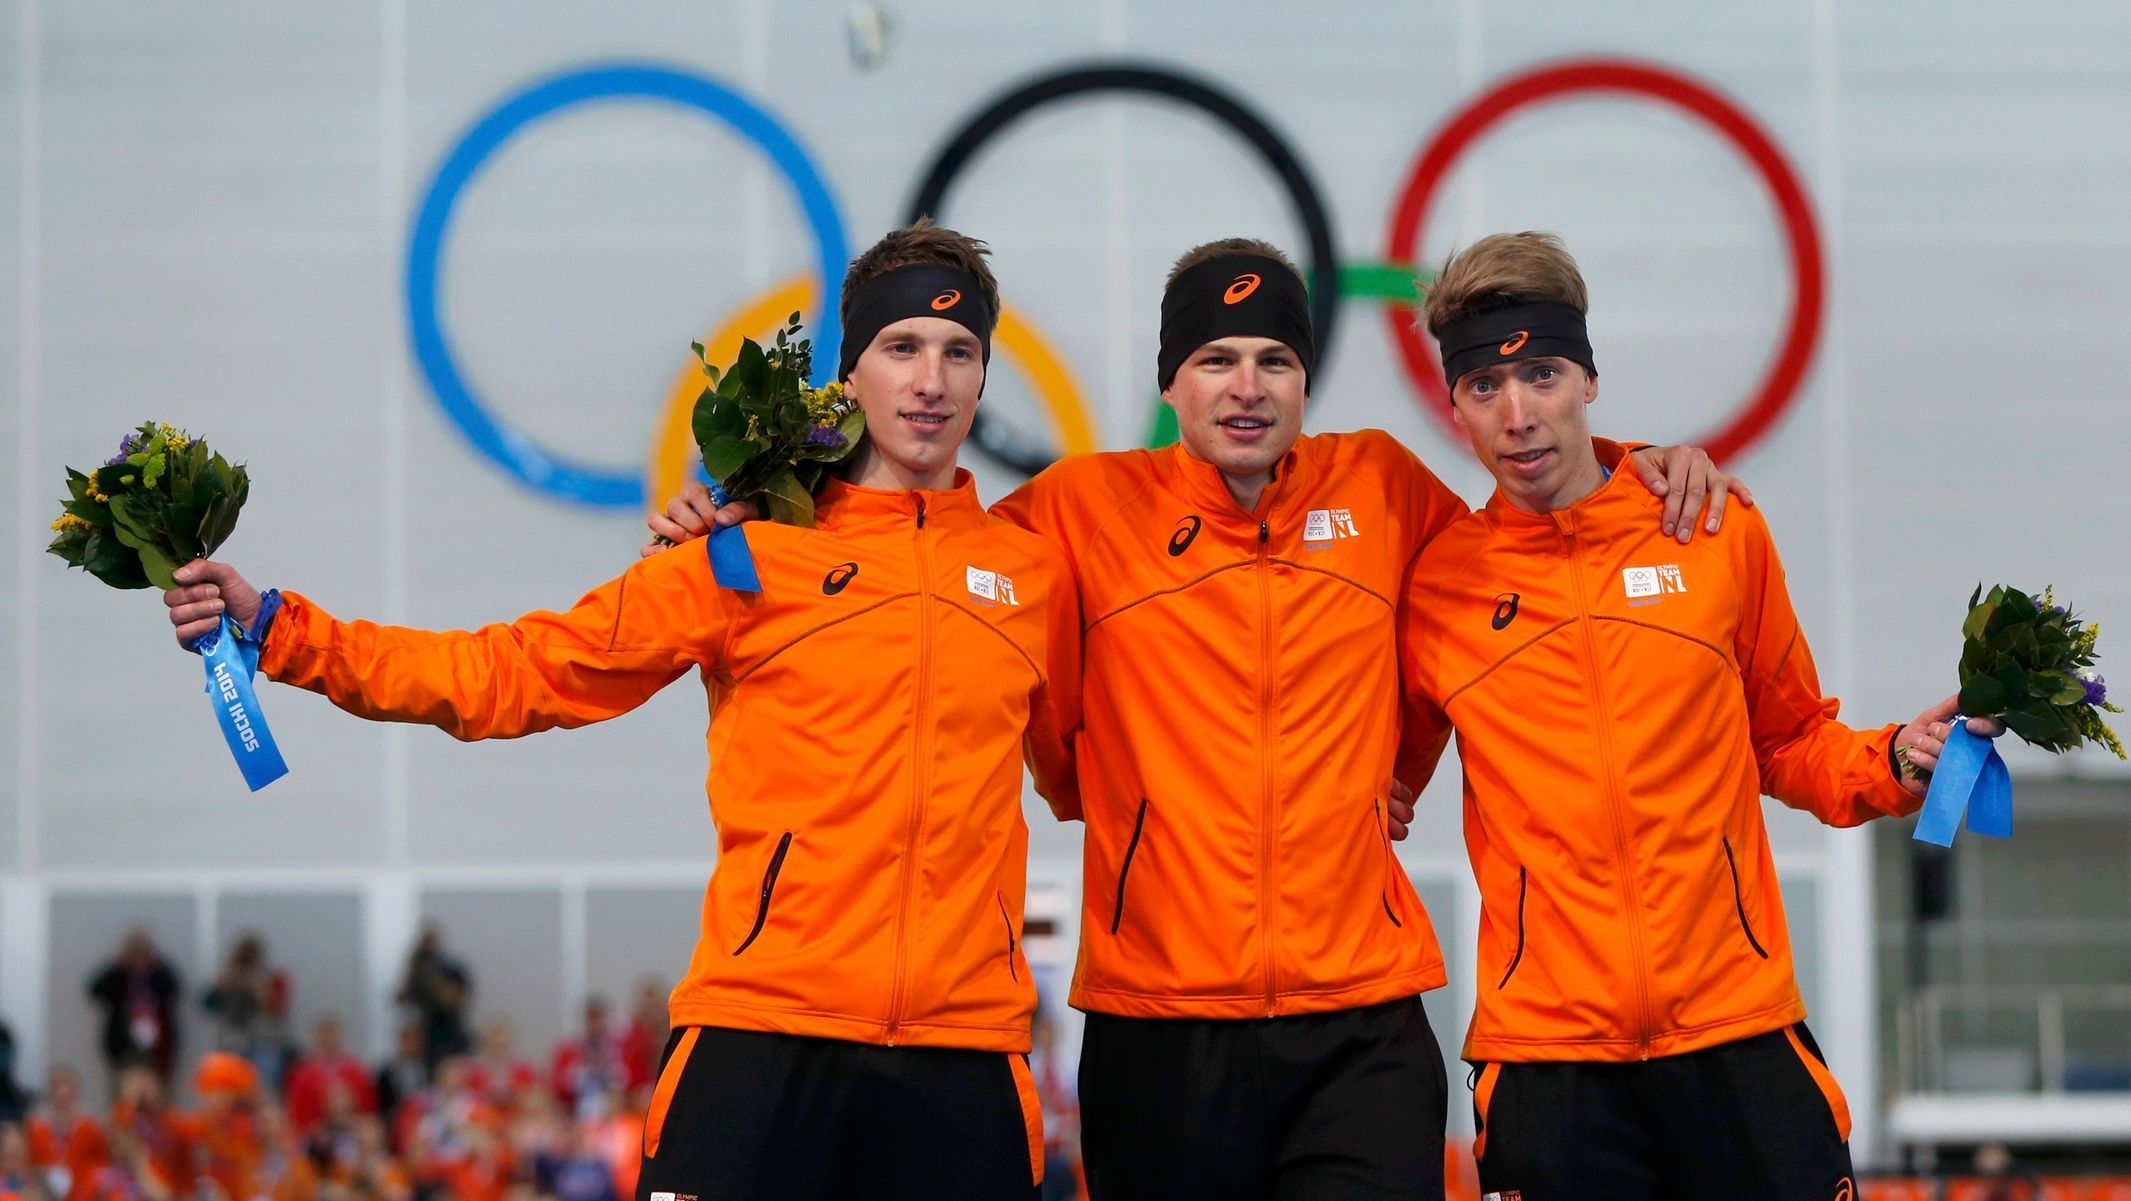 Soči 2014: hokej, 5000 m rychlobruslení: Jan Blokhuijsen, Sven Kramer a Jorrit Bergsma